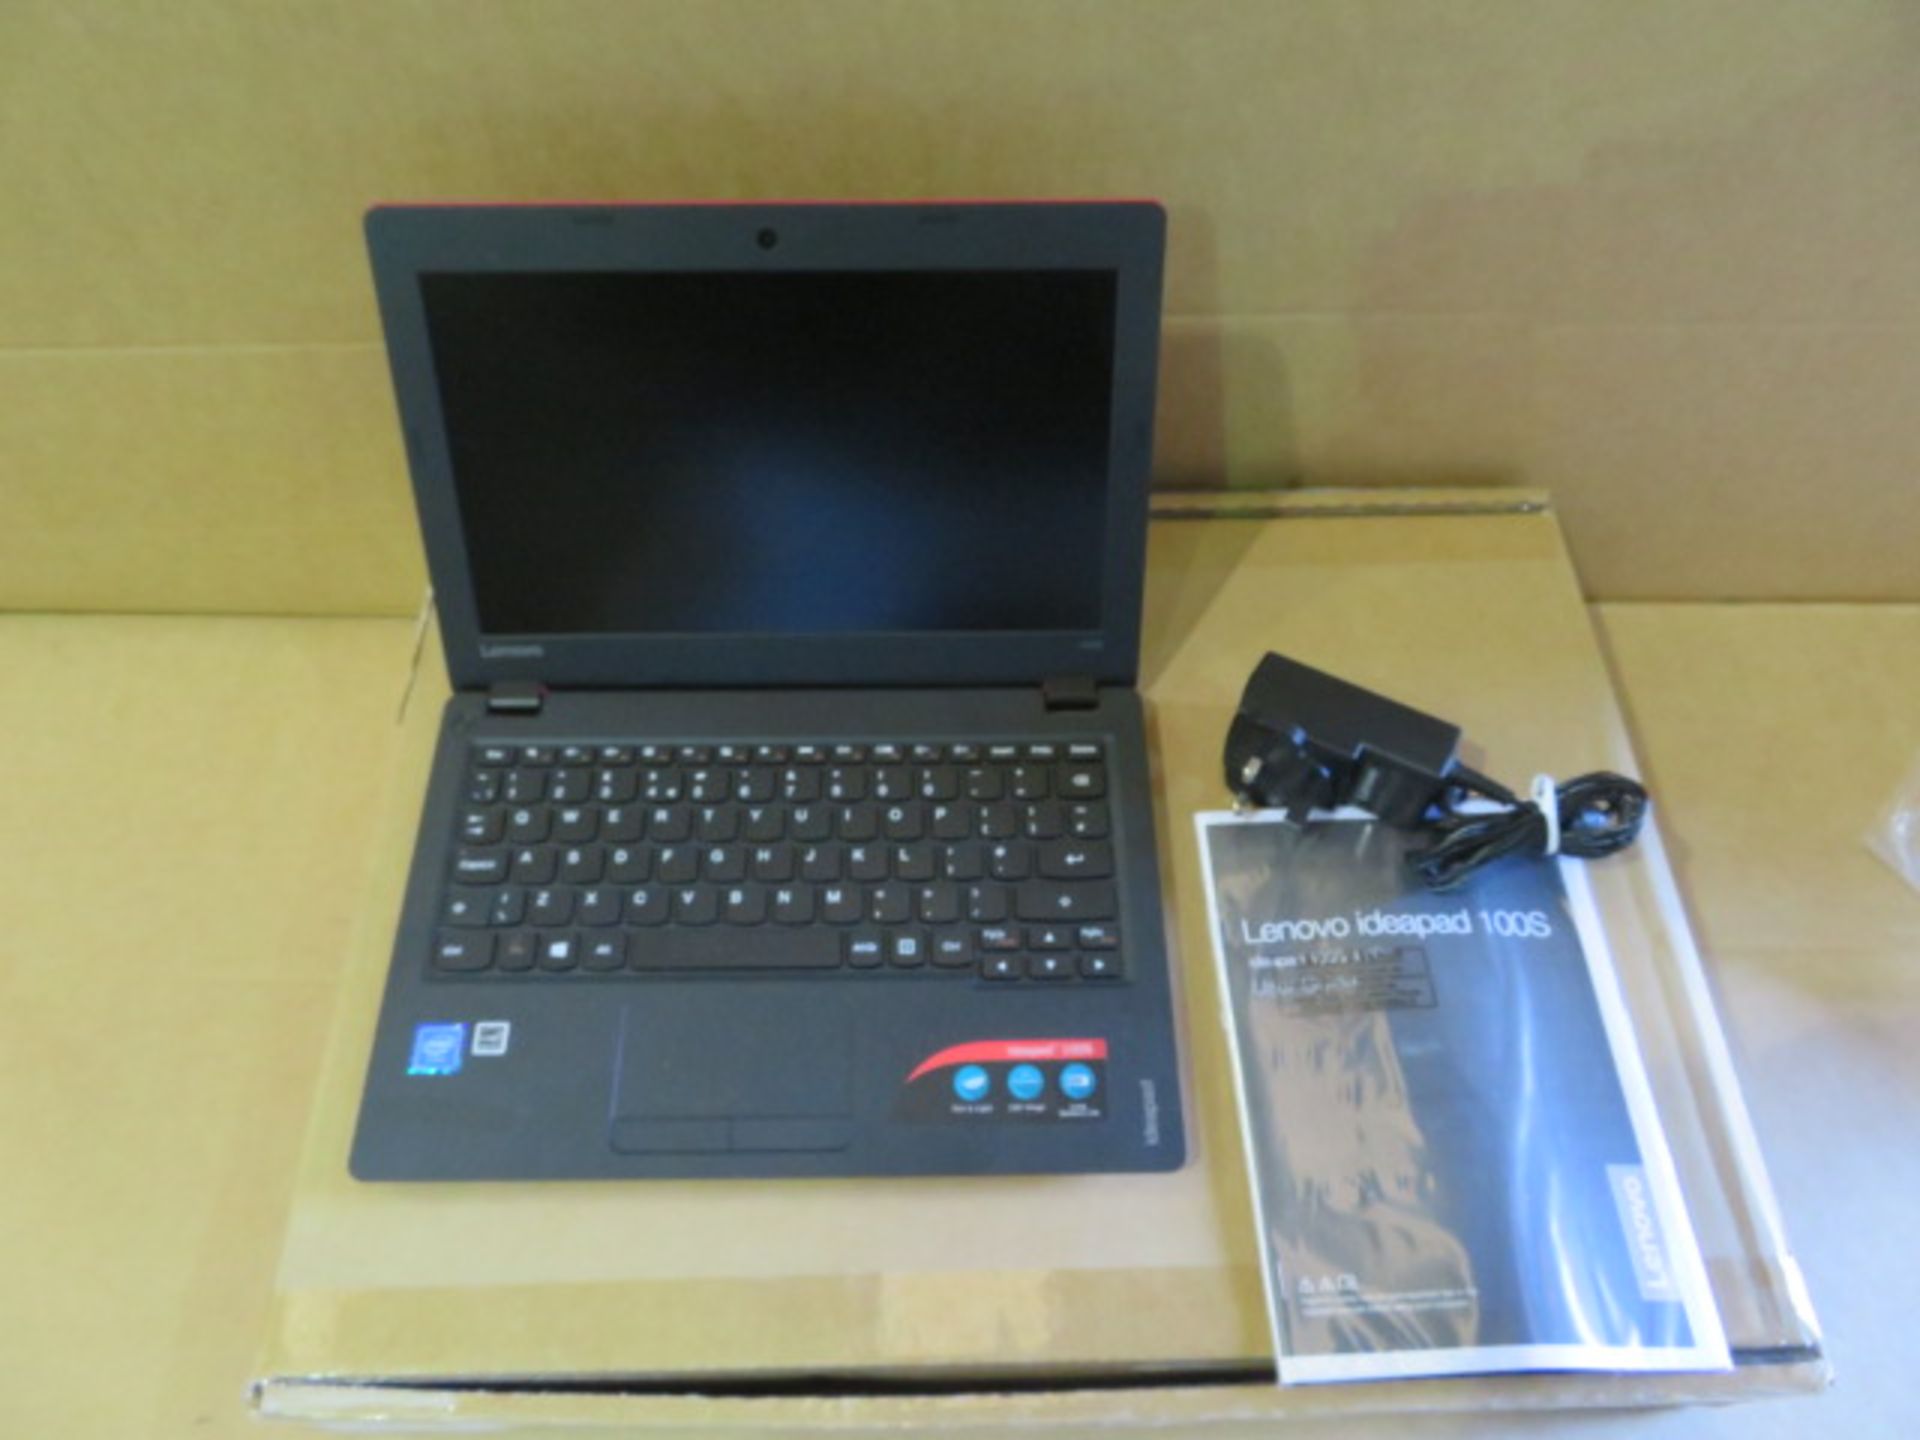 (23) 1 x Grade B - Lenovo Ideapad 110 RED 11.6" Laptop Intel Celeron N3060, 2GB RAM, 32GB - Image 3 of 4